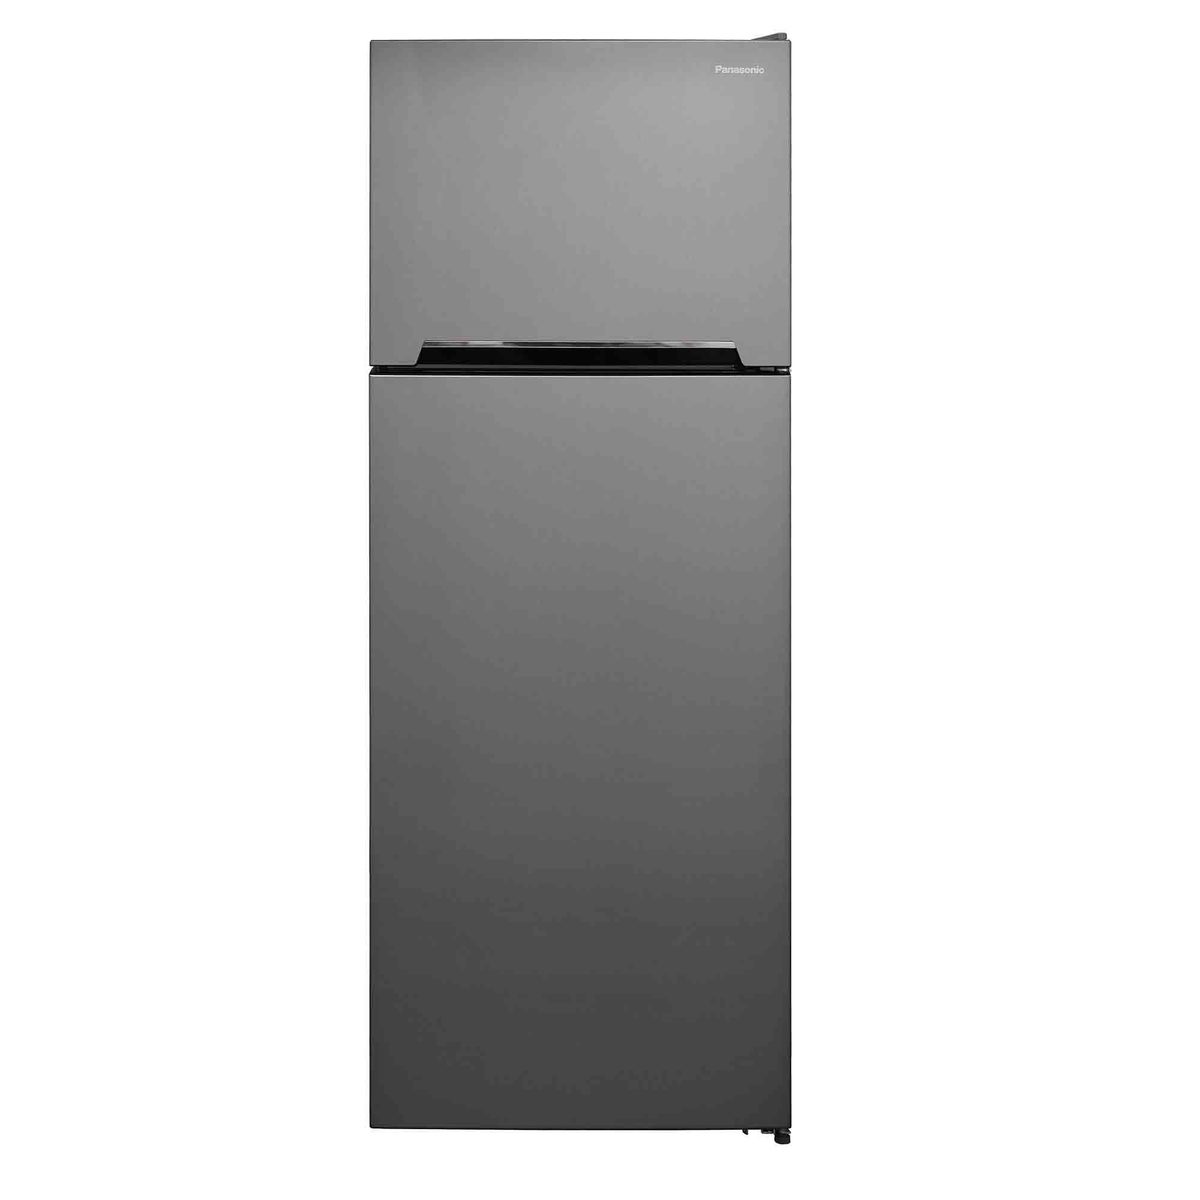 Panasonic Double Door Refrigerator NRBC532VSAE 400Ltr